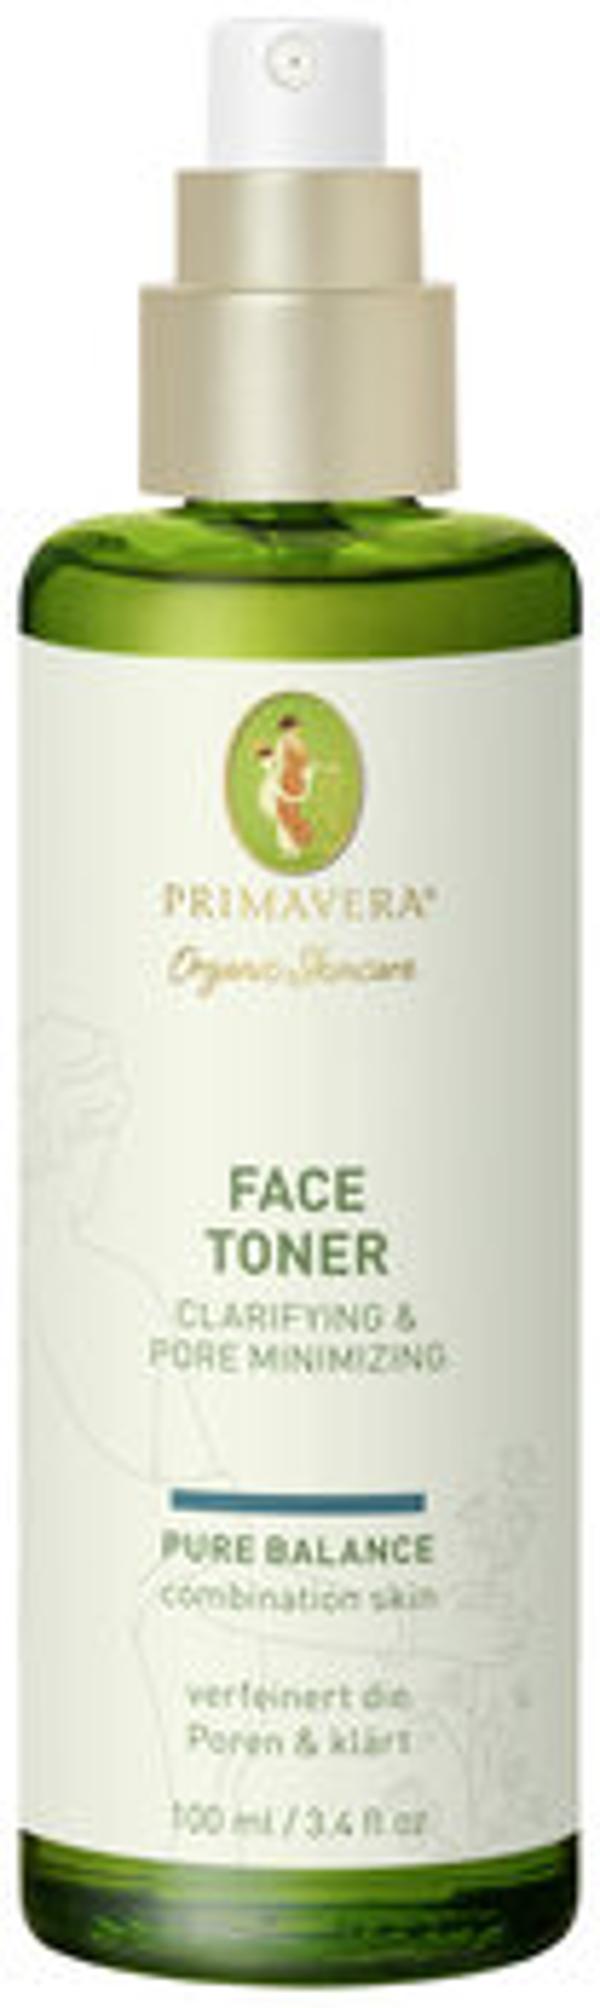 Produktfoto zu Face Toner Clarifying & Pore Minimizing, 100 ml